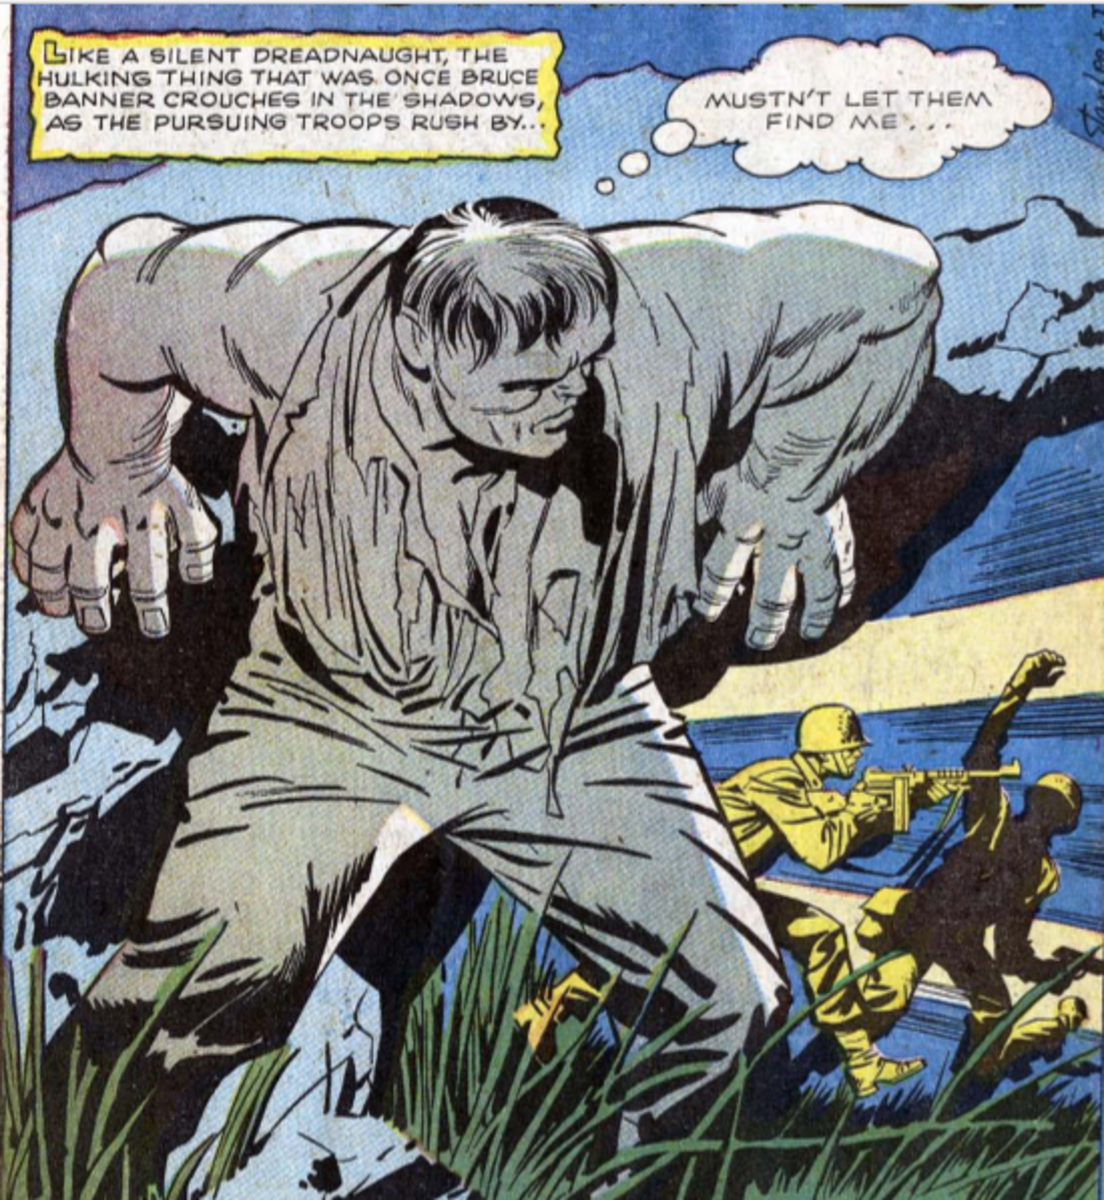 propps-morphology-and-comics-the-incredible-hulk-1